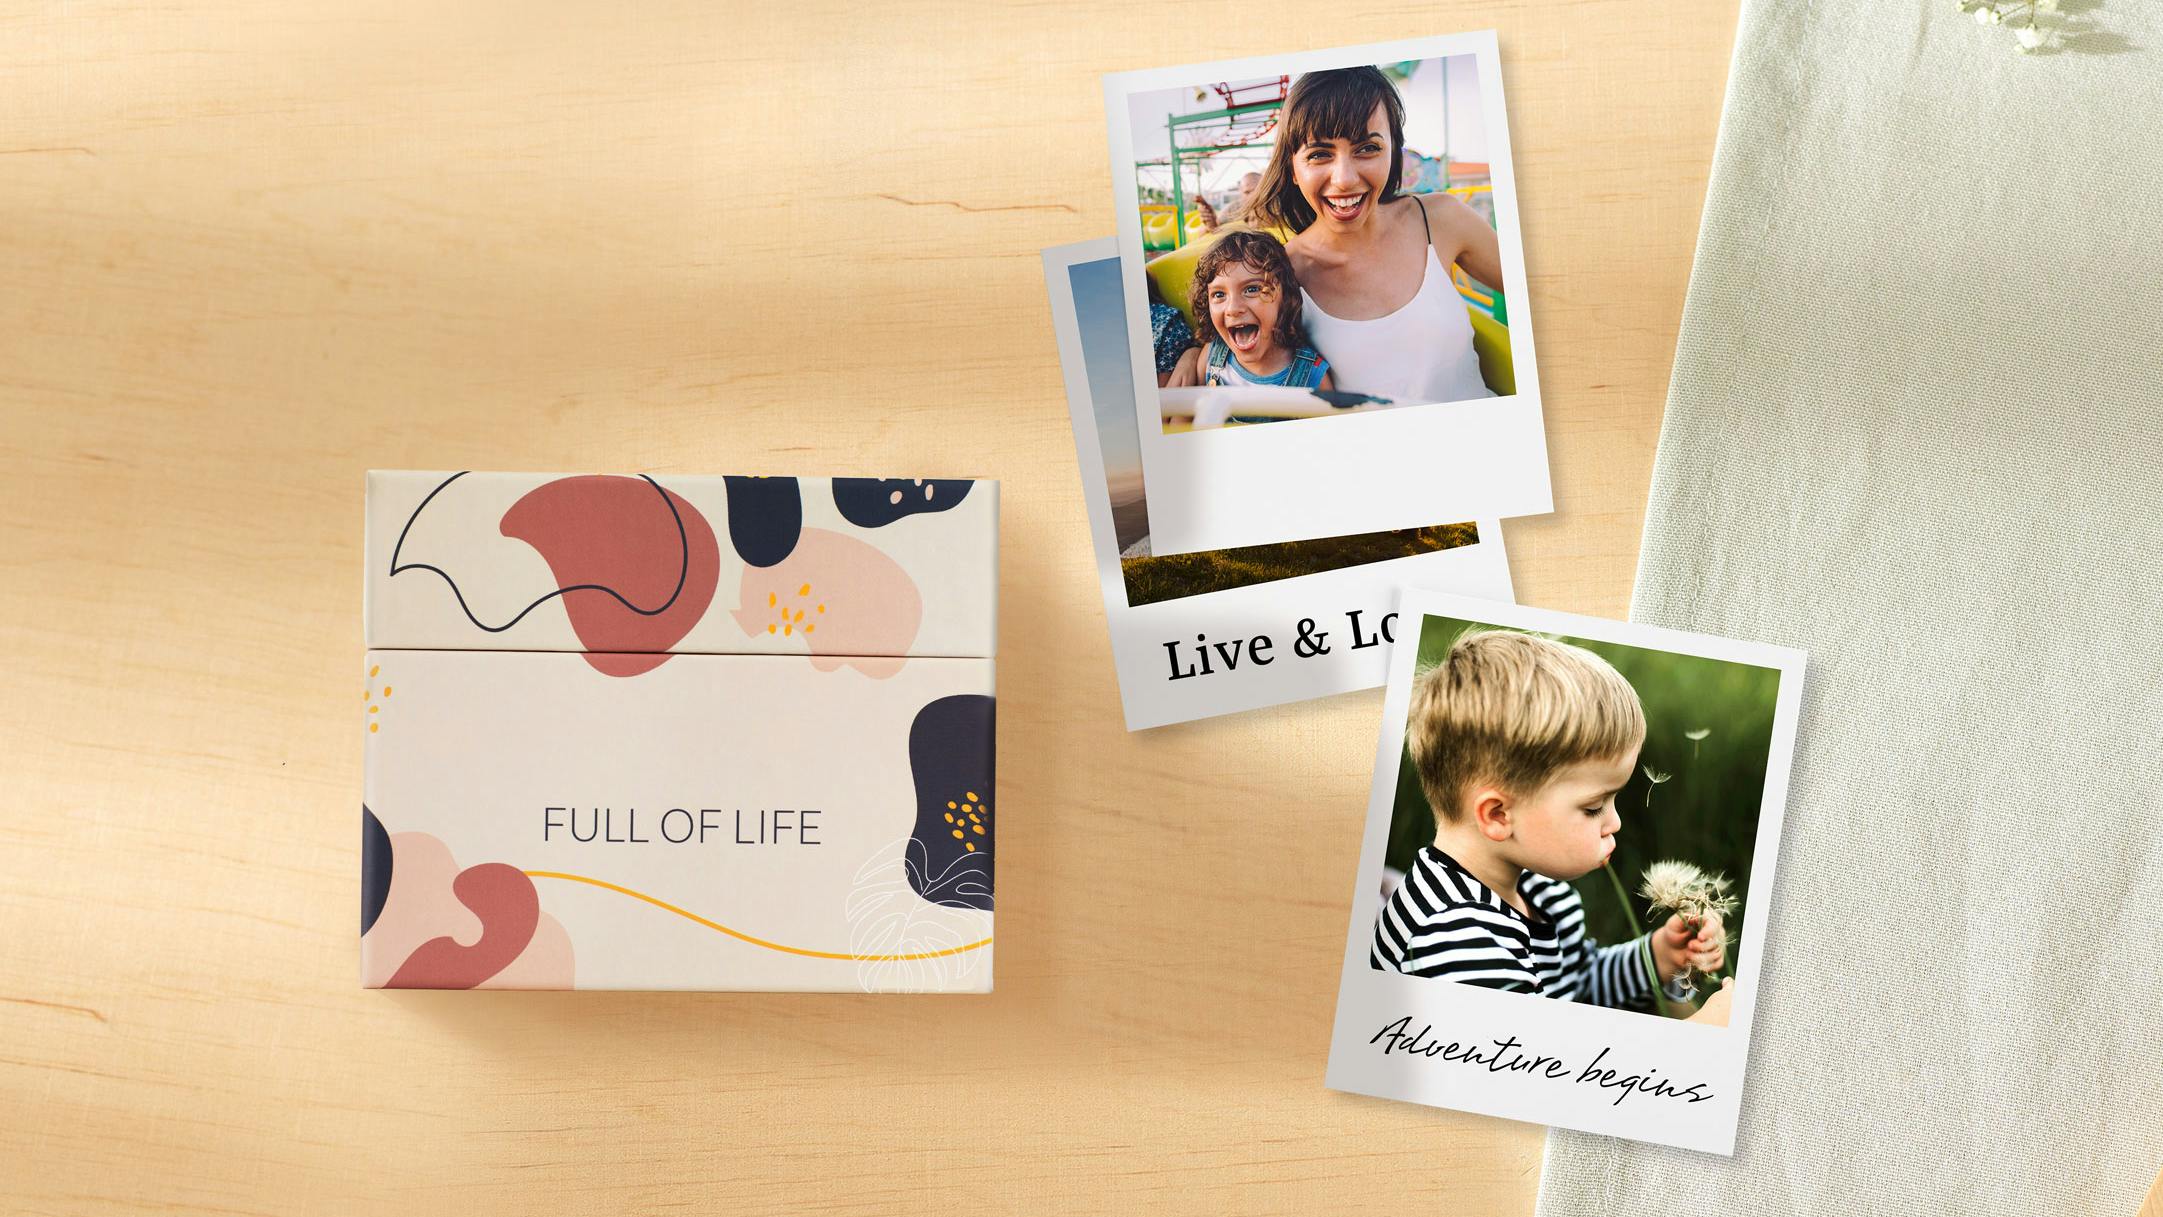 Retro prints box met full of life design en familiefoto's in ambiance